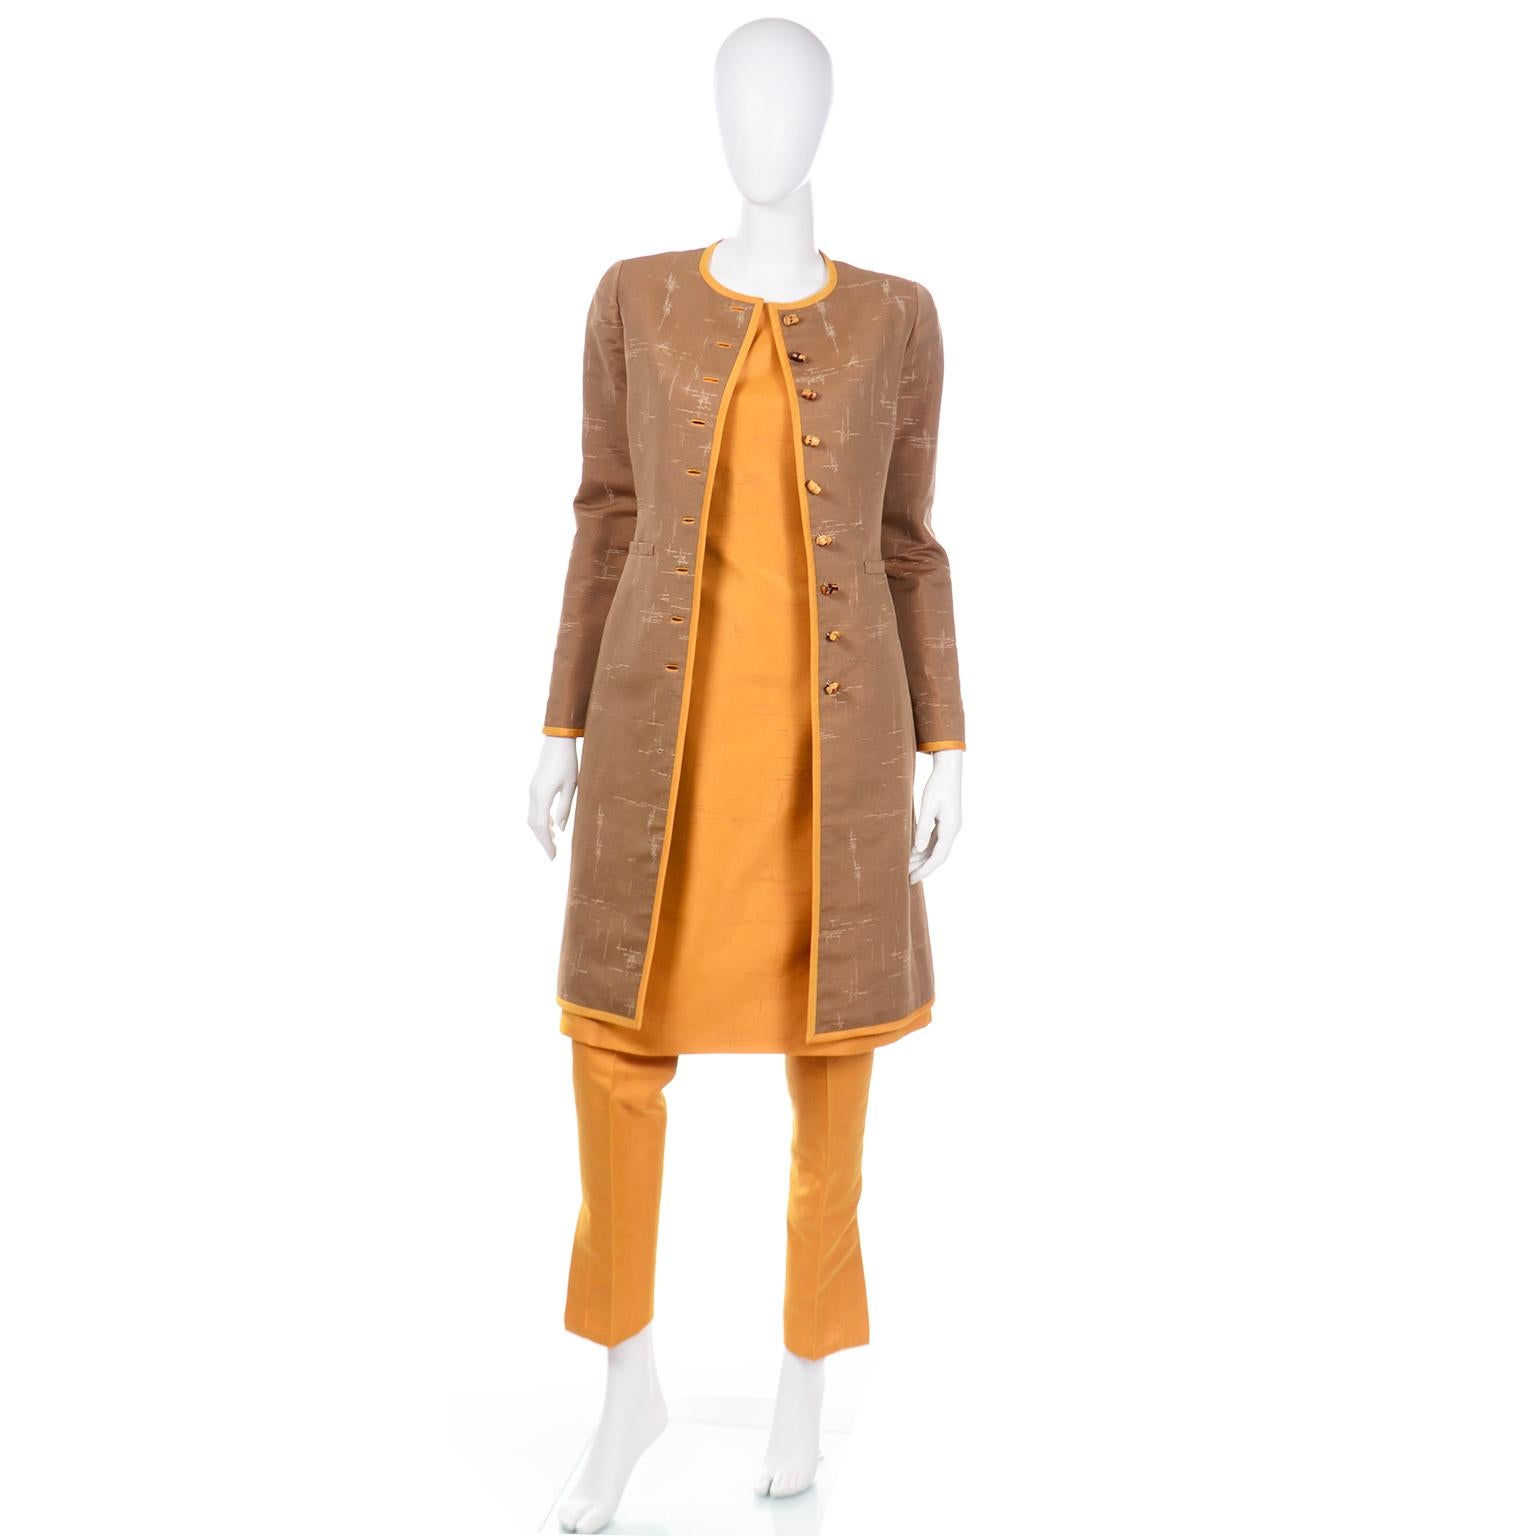 Oscar de la Renta 1990s Vintage 1960s inspired Coat Pants and Dress Outfit For Sale 3